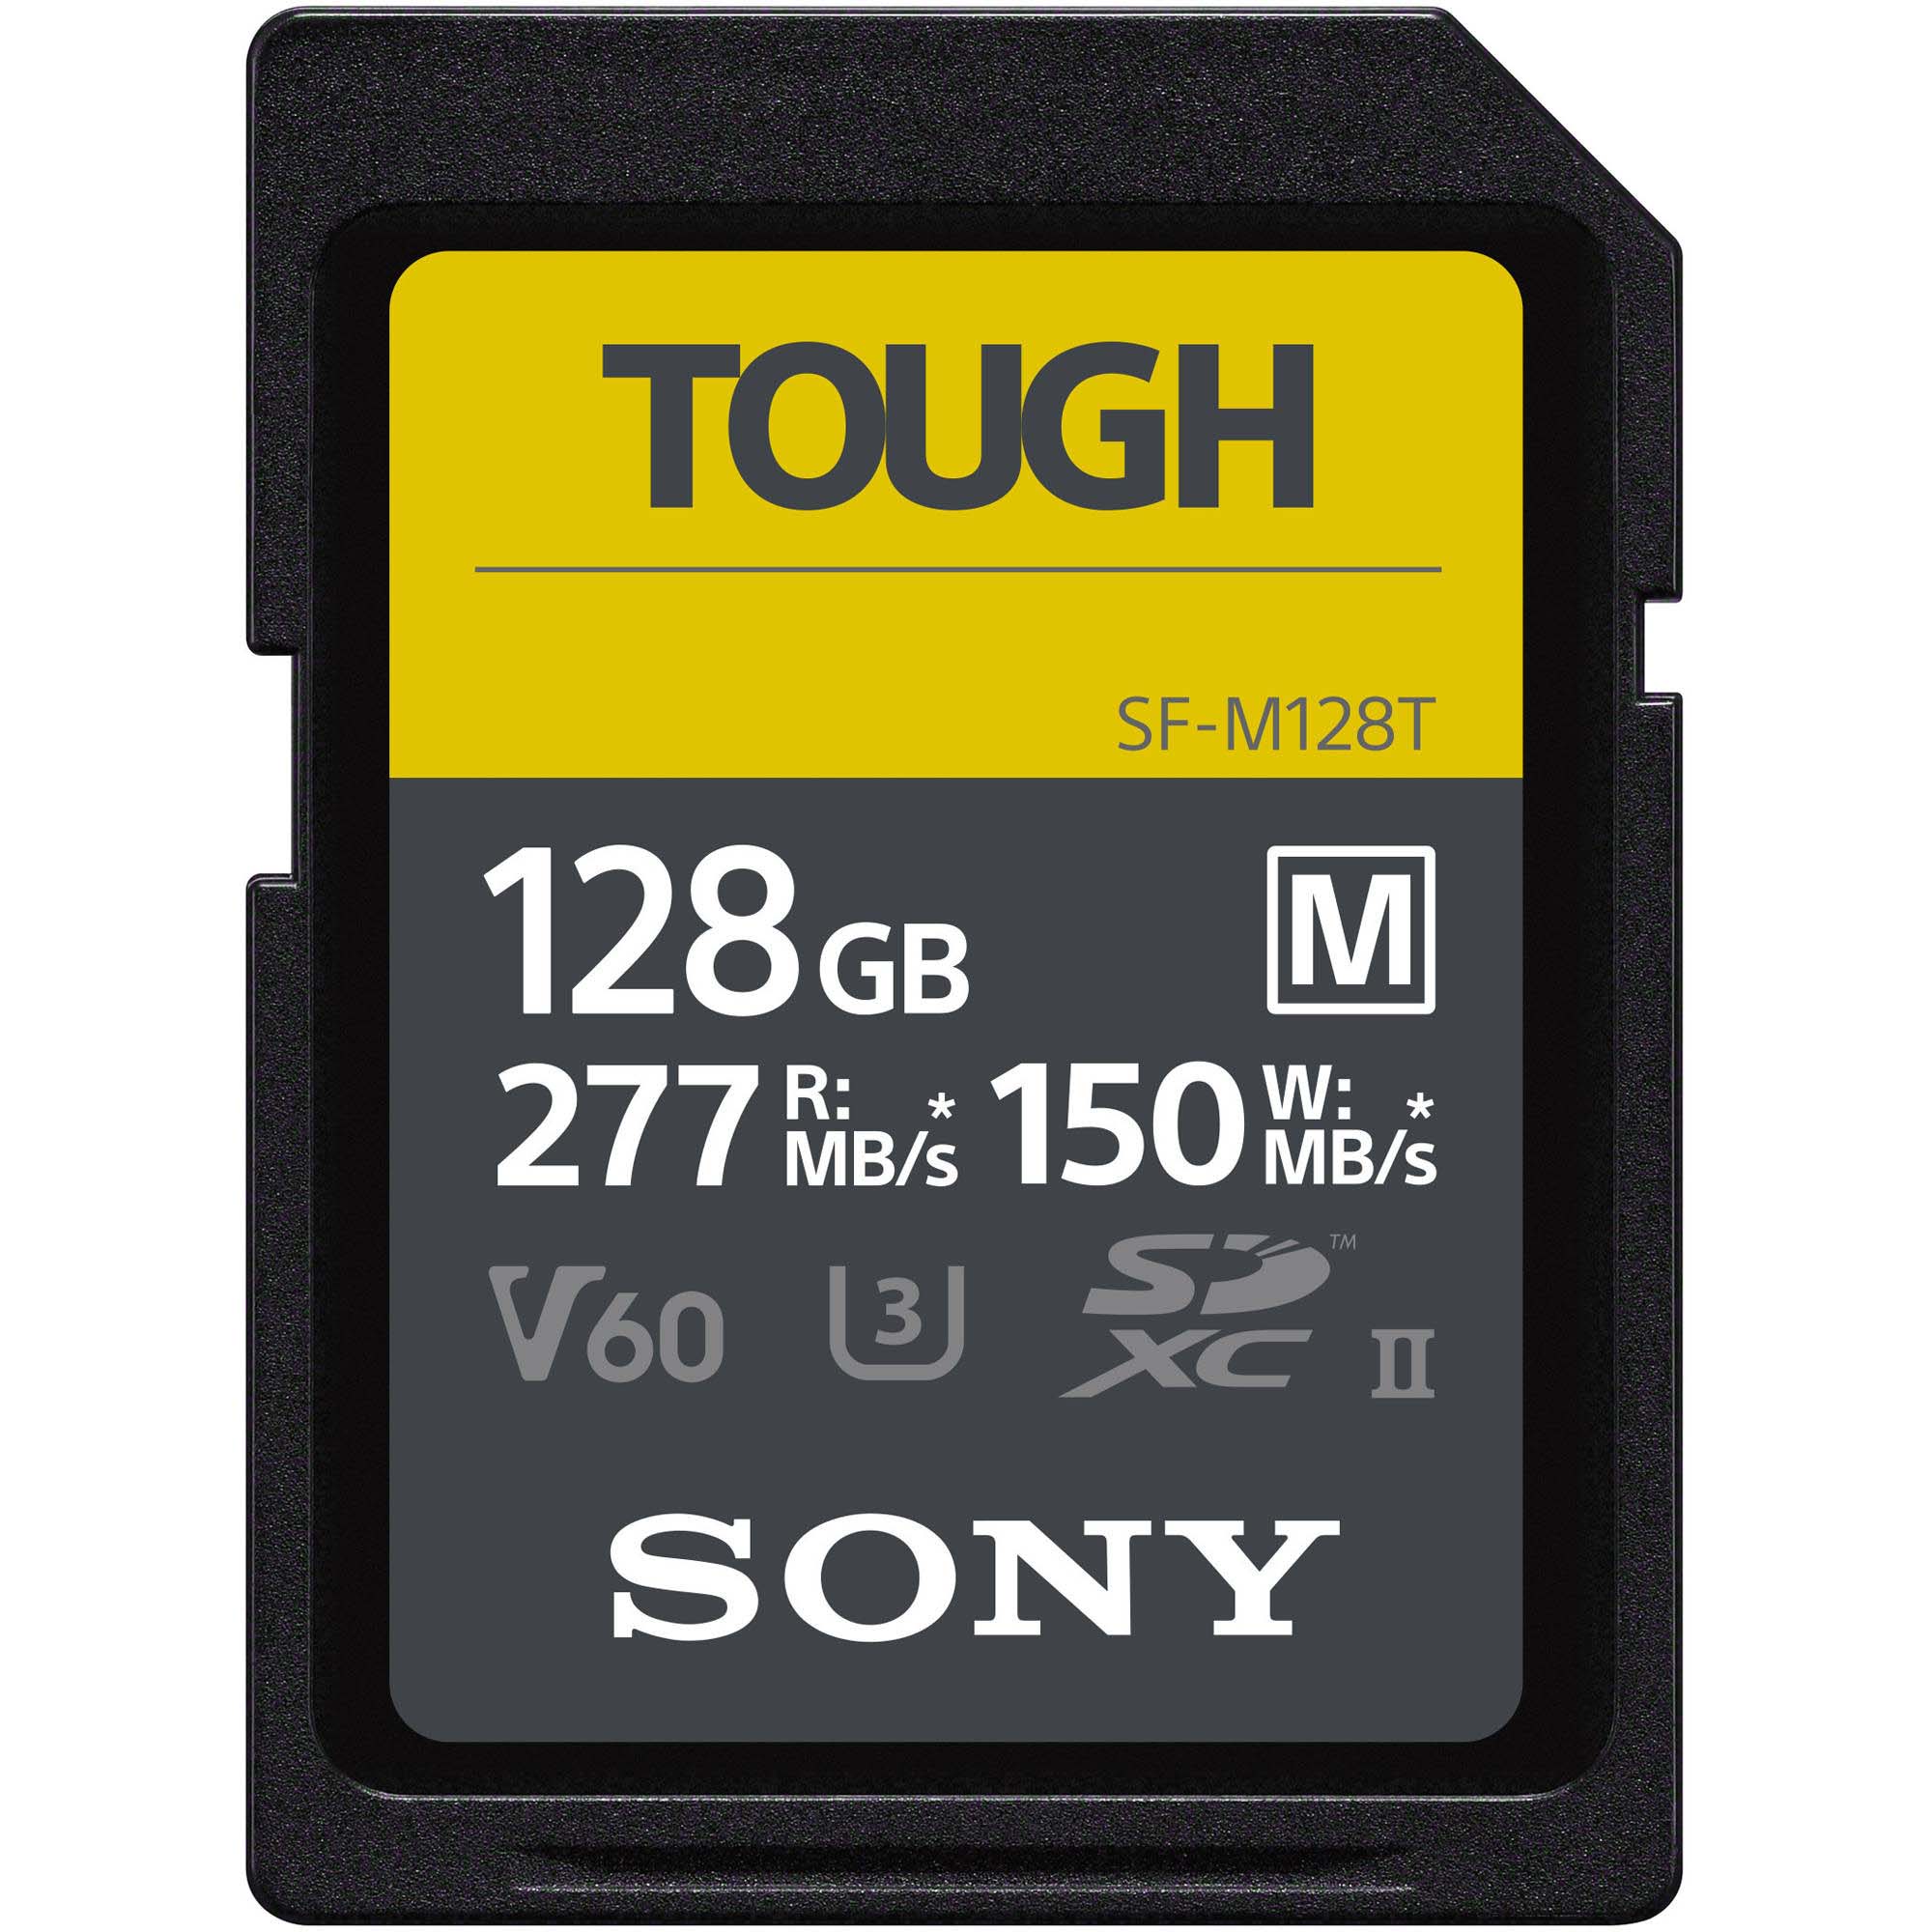 TARJETA SDXC 128 GB SONY M TOUGH (150 MB/SEG) V60 SDXC II